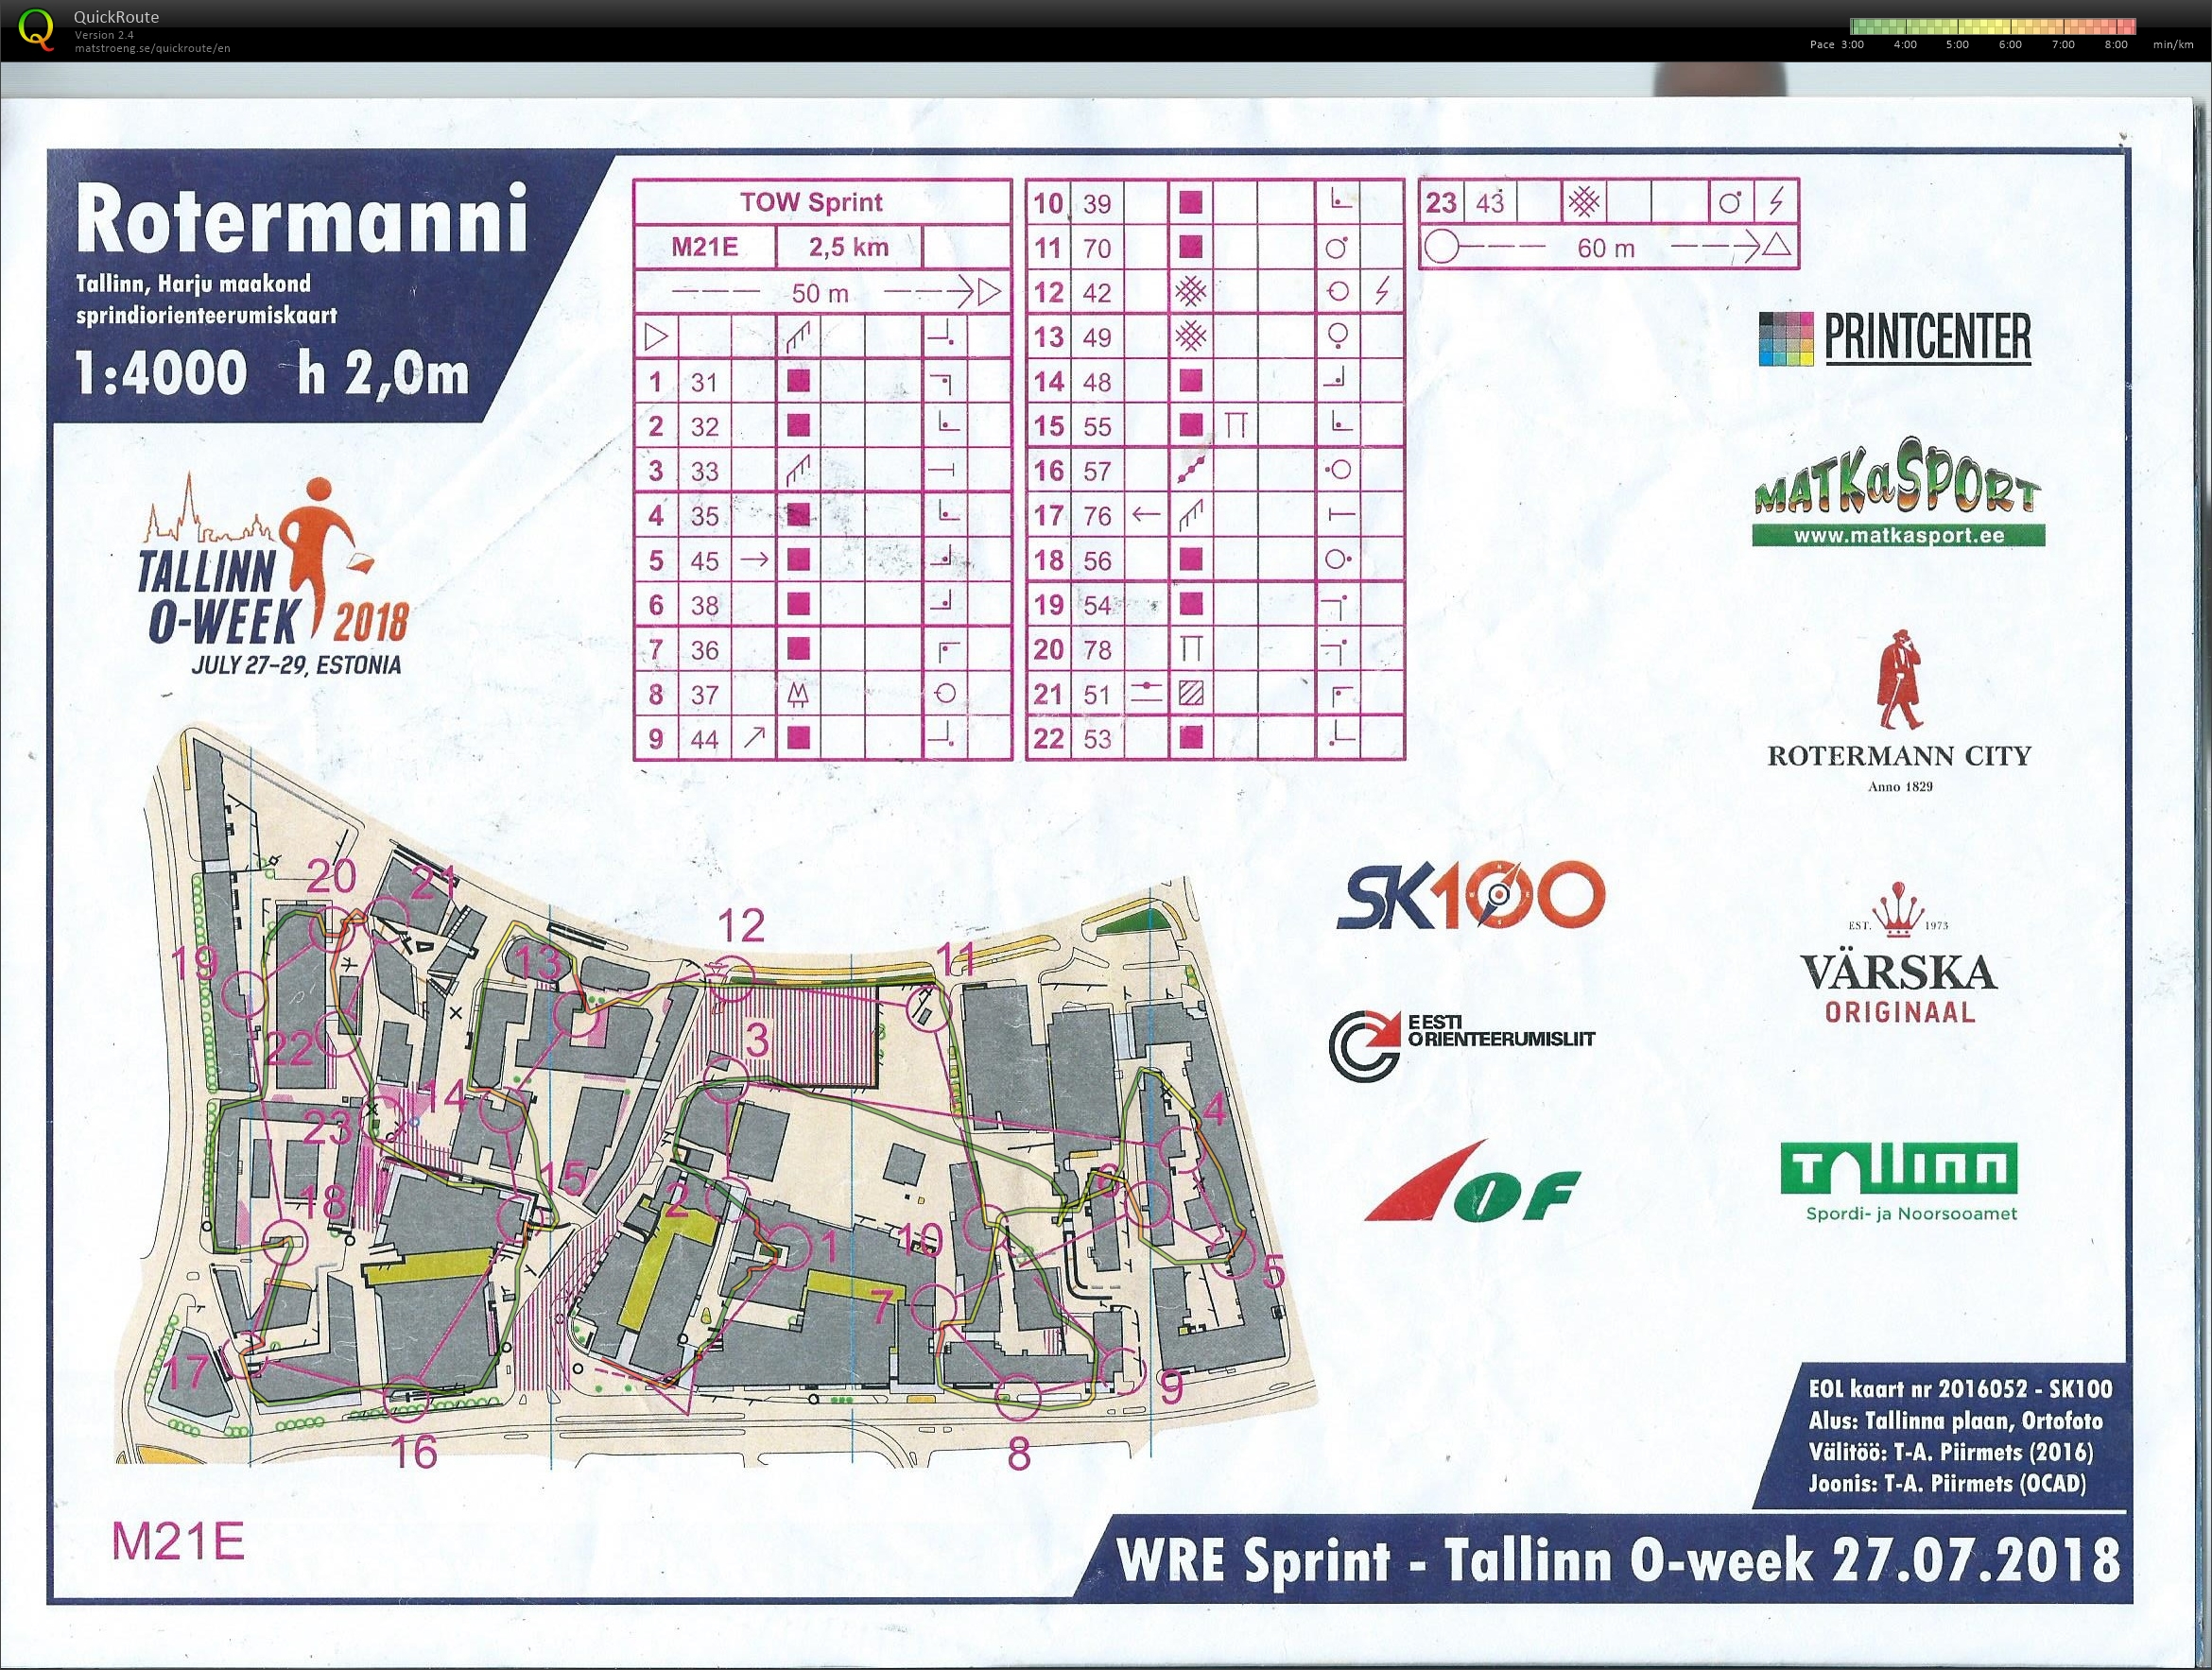 Z590 - Tallinn O-Week Sprint WRE (27/07/2018)